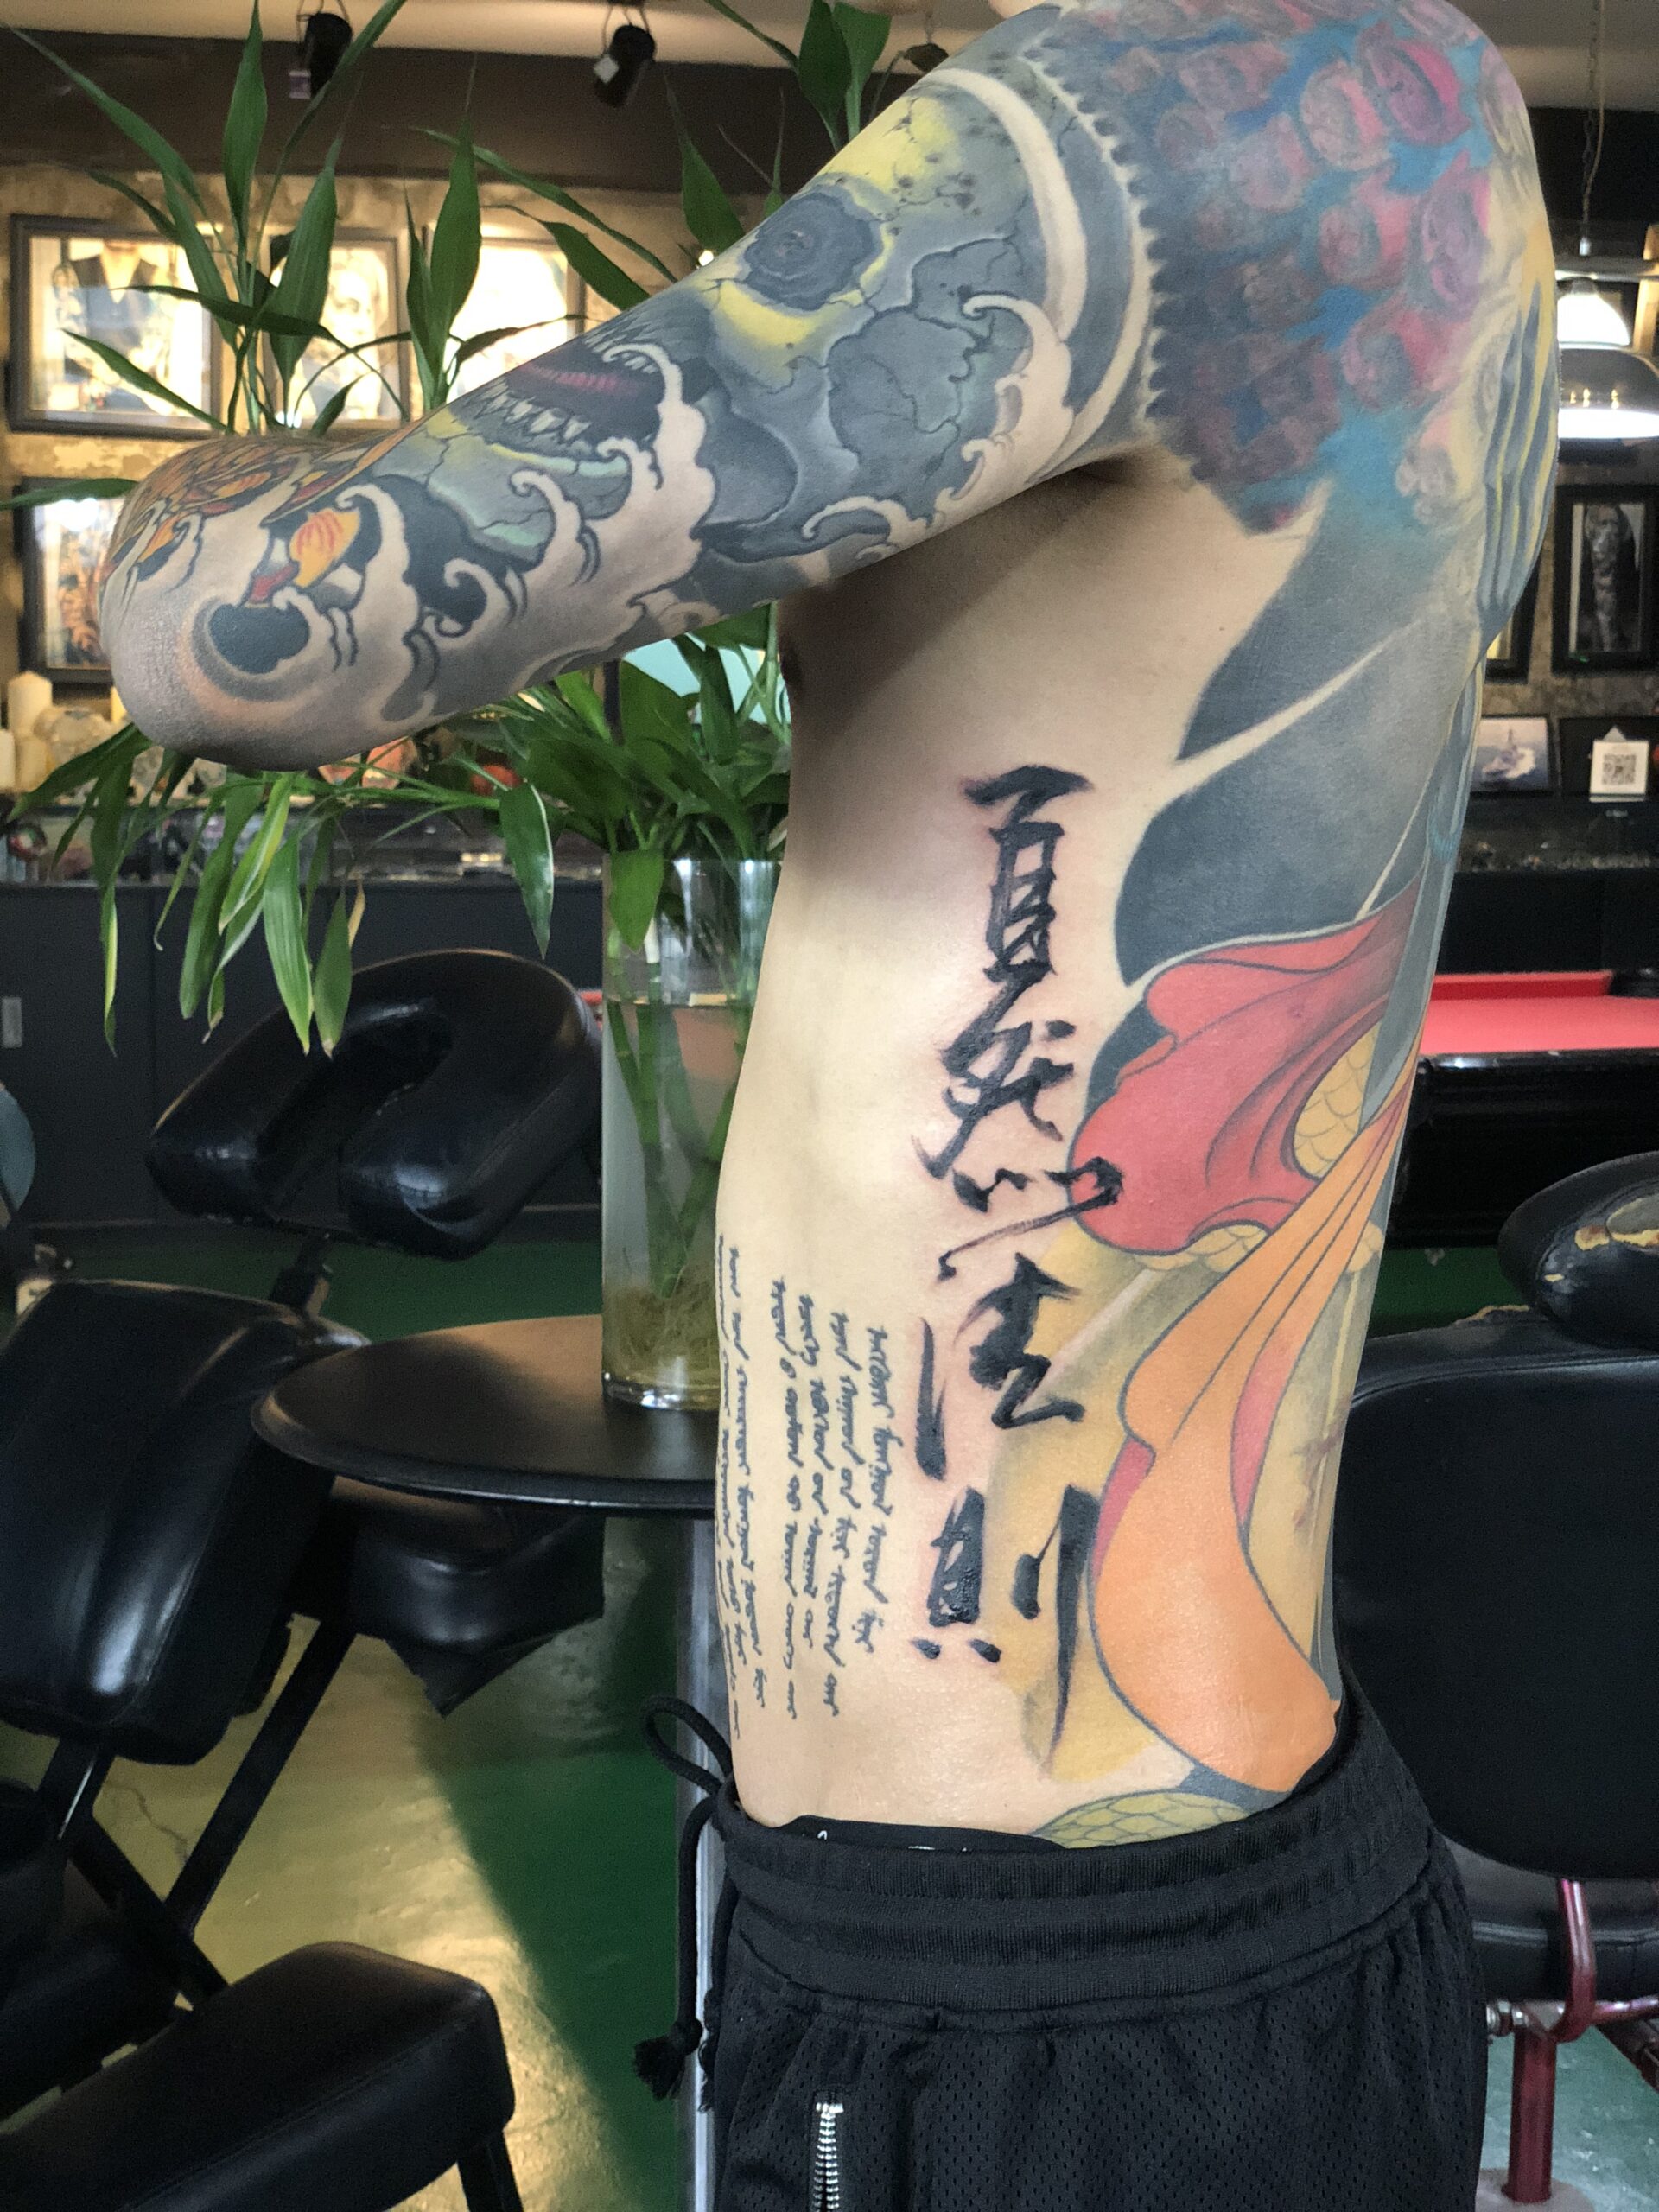 zhuo dan ting tattoo work 卓丹婷纹身作品 自然法则 1